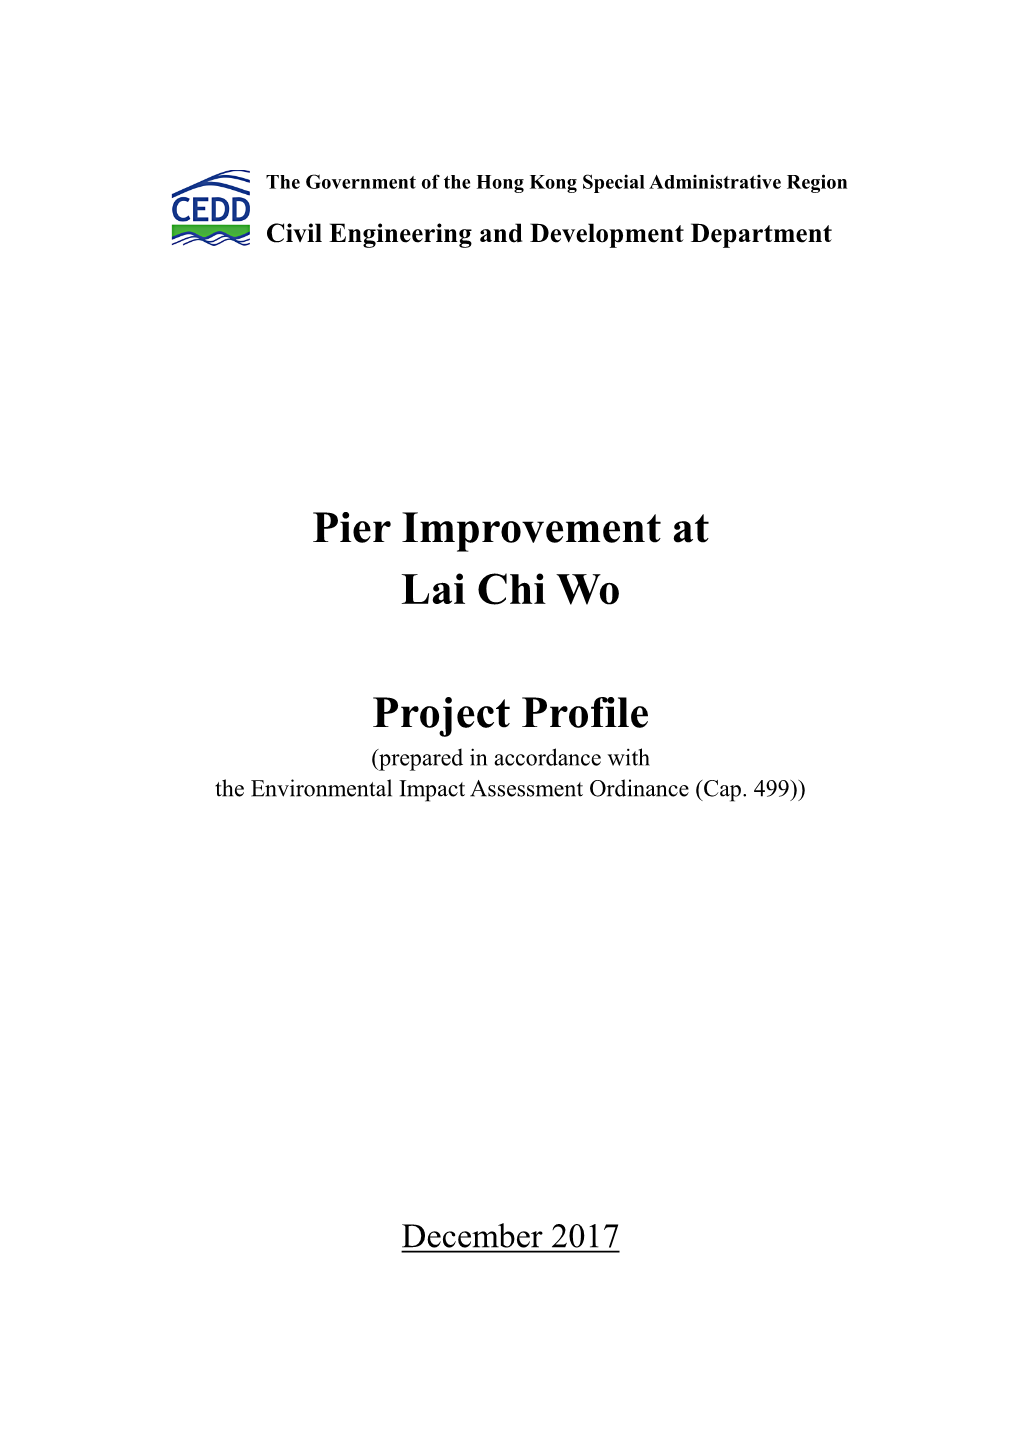 Pier Improvement at Lai Chi Wo Project Profile